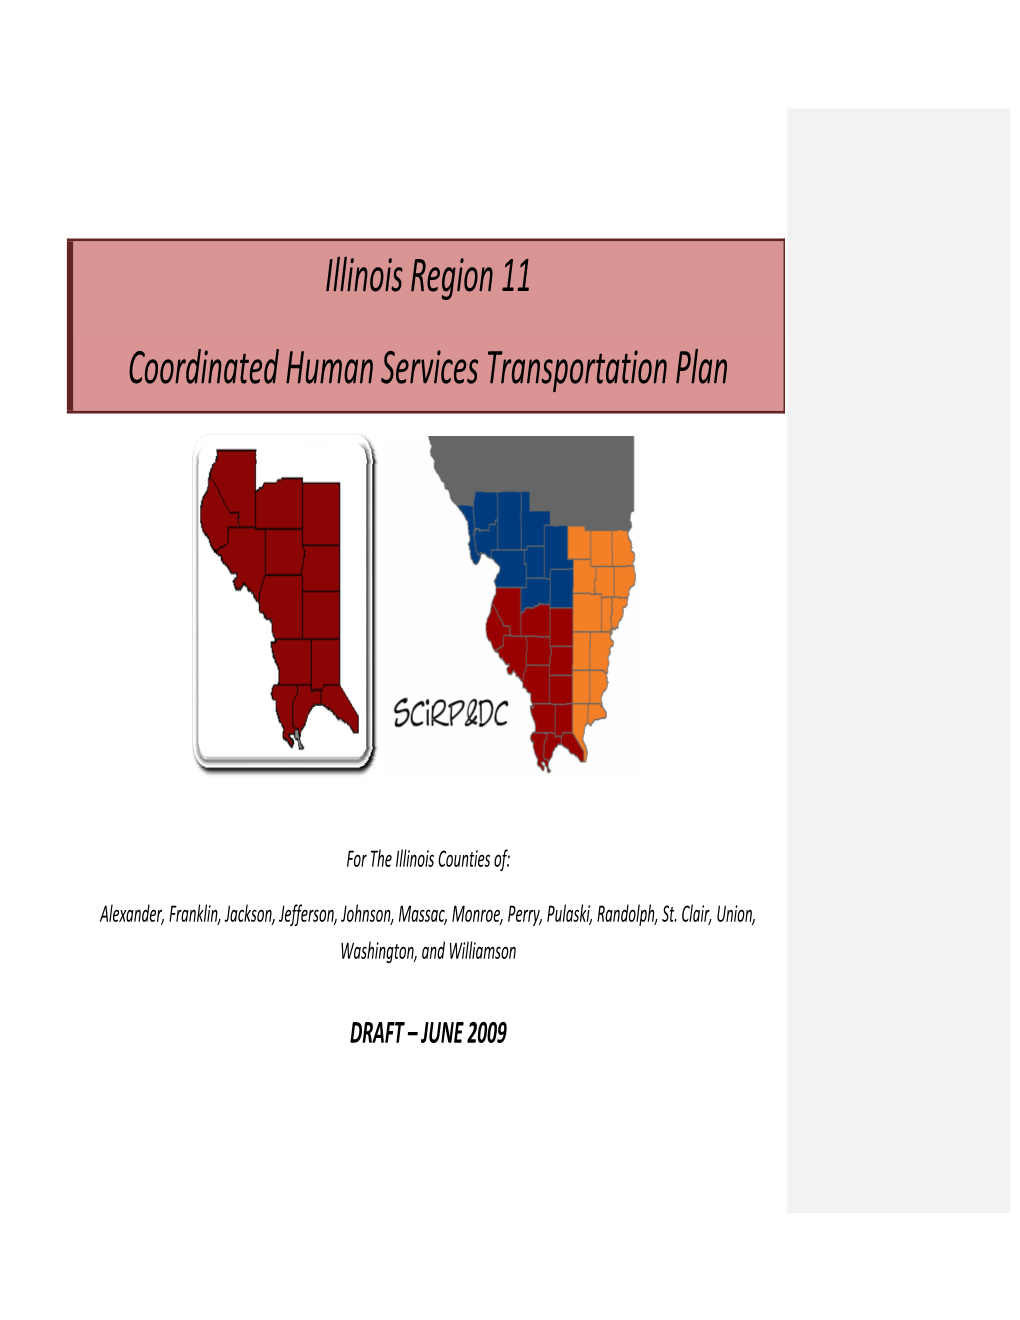 Illinois Region 11 Coordinated Human Services Transportation Plan